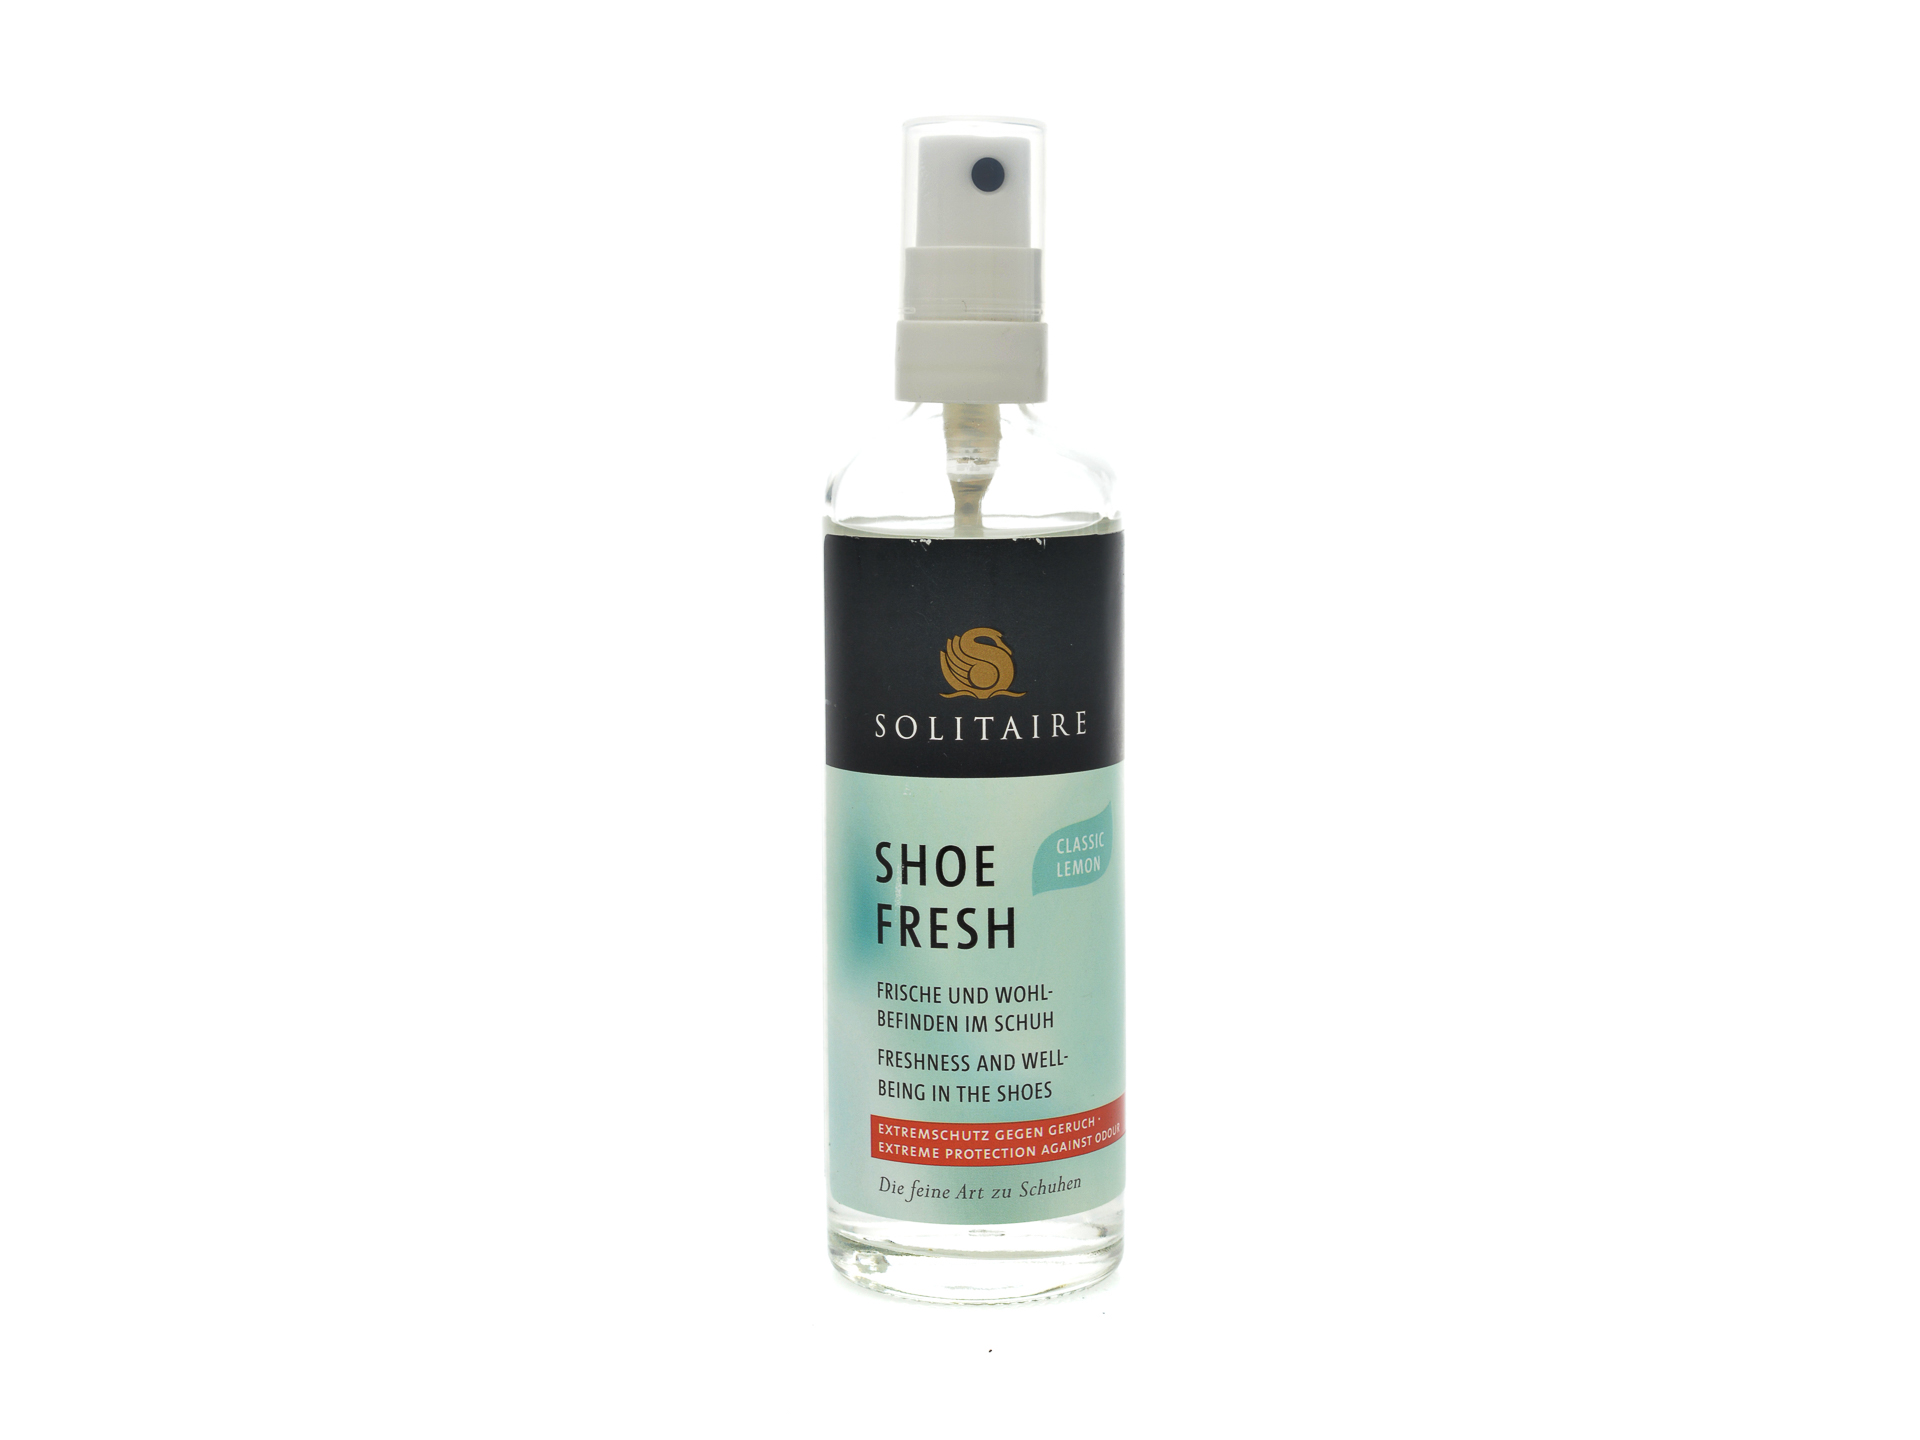 PR Spray pentru mentinerea mirosului placut in incaltaminte, Solitaire otter.ro otter.ro